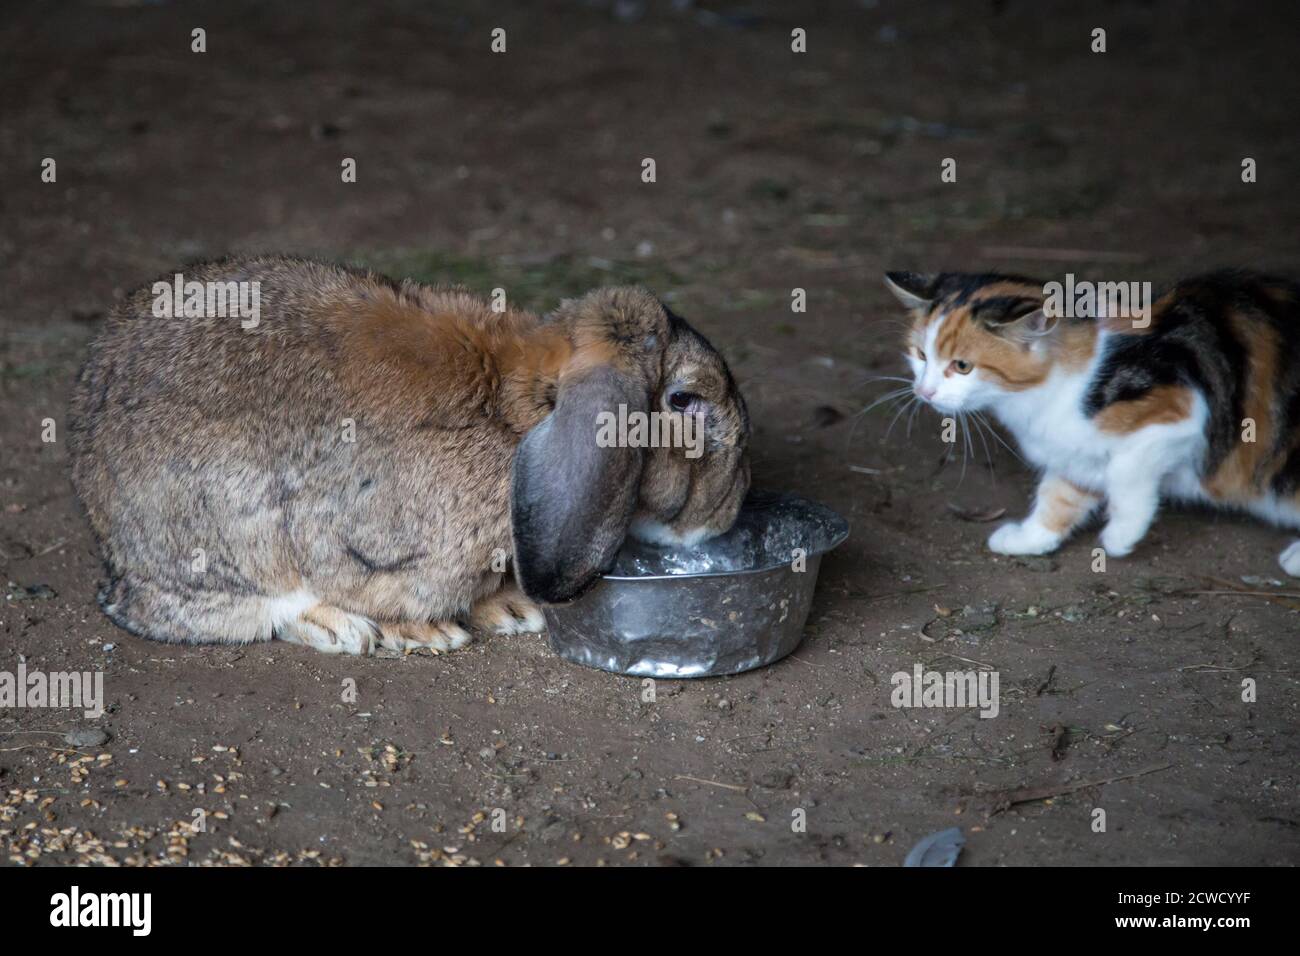 Animal friends, cat and rabbit Stock Photo